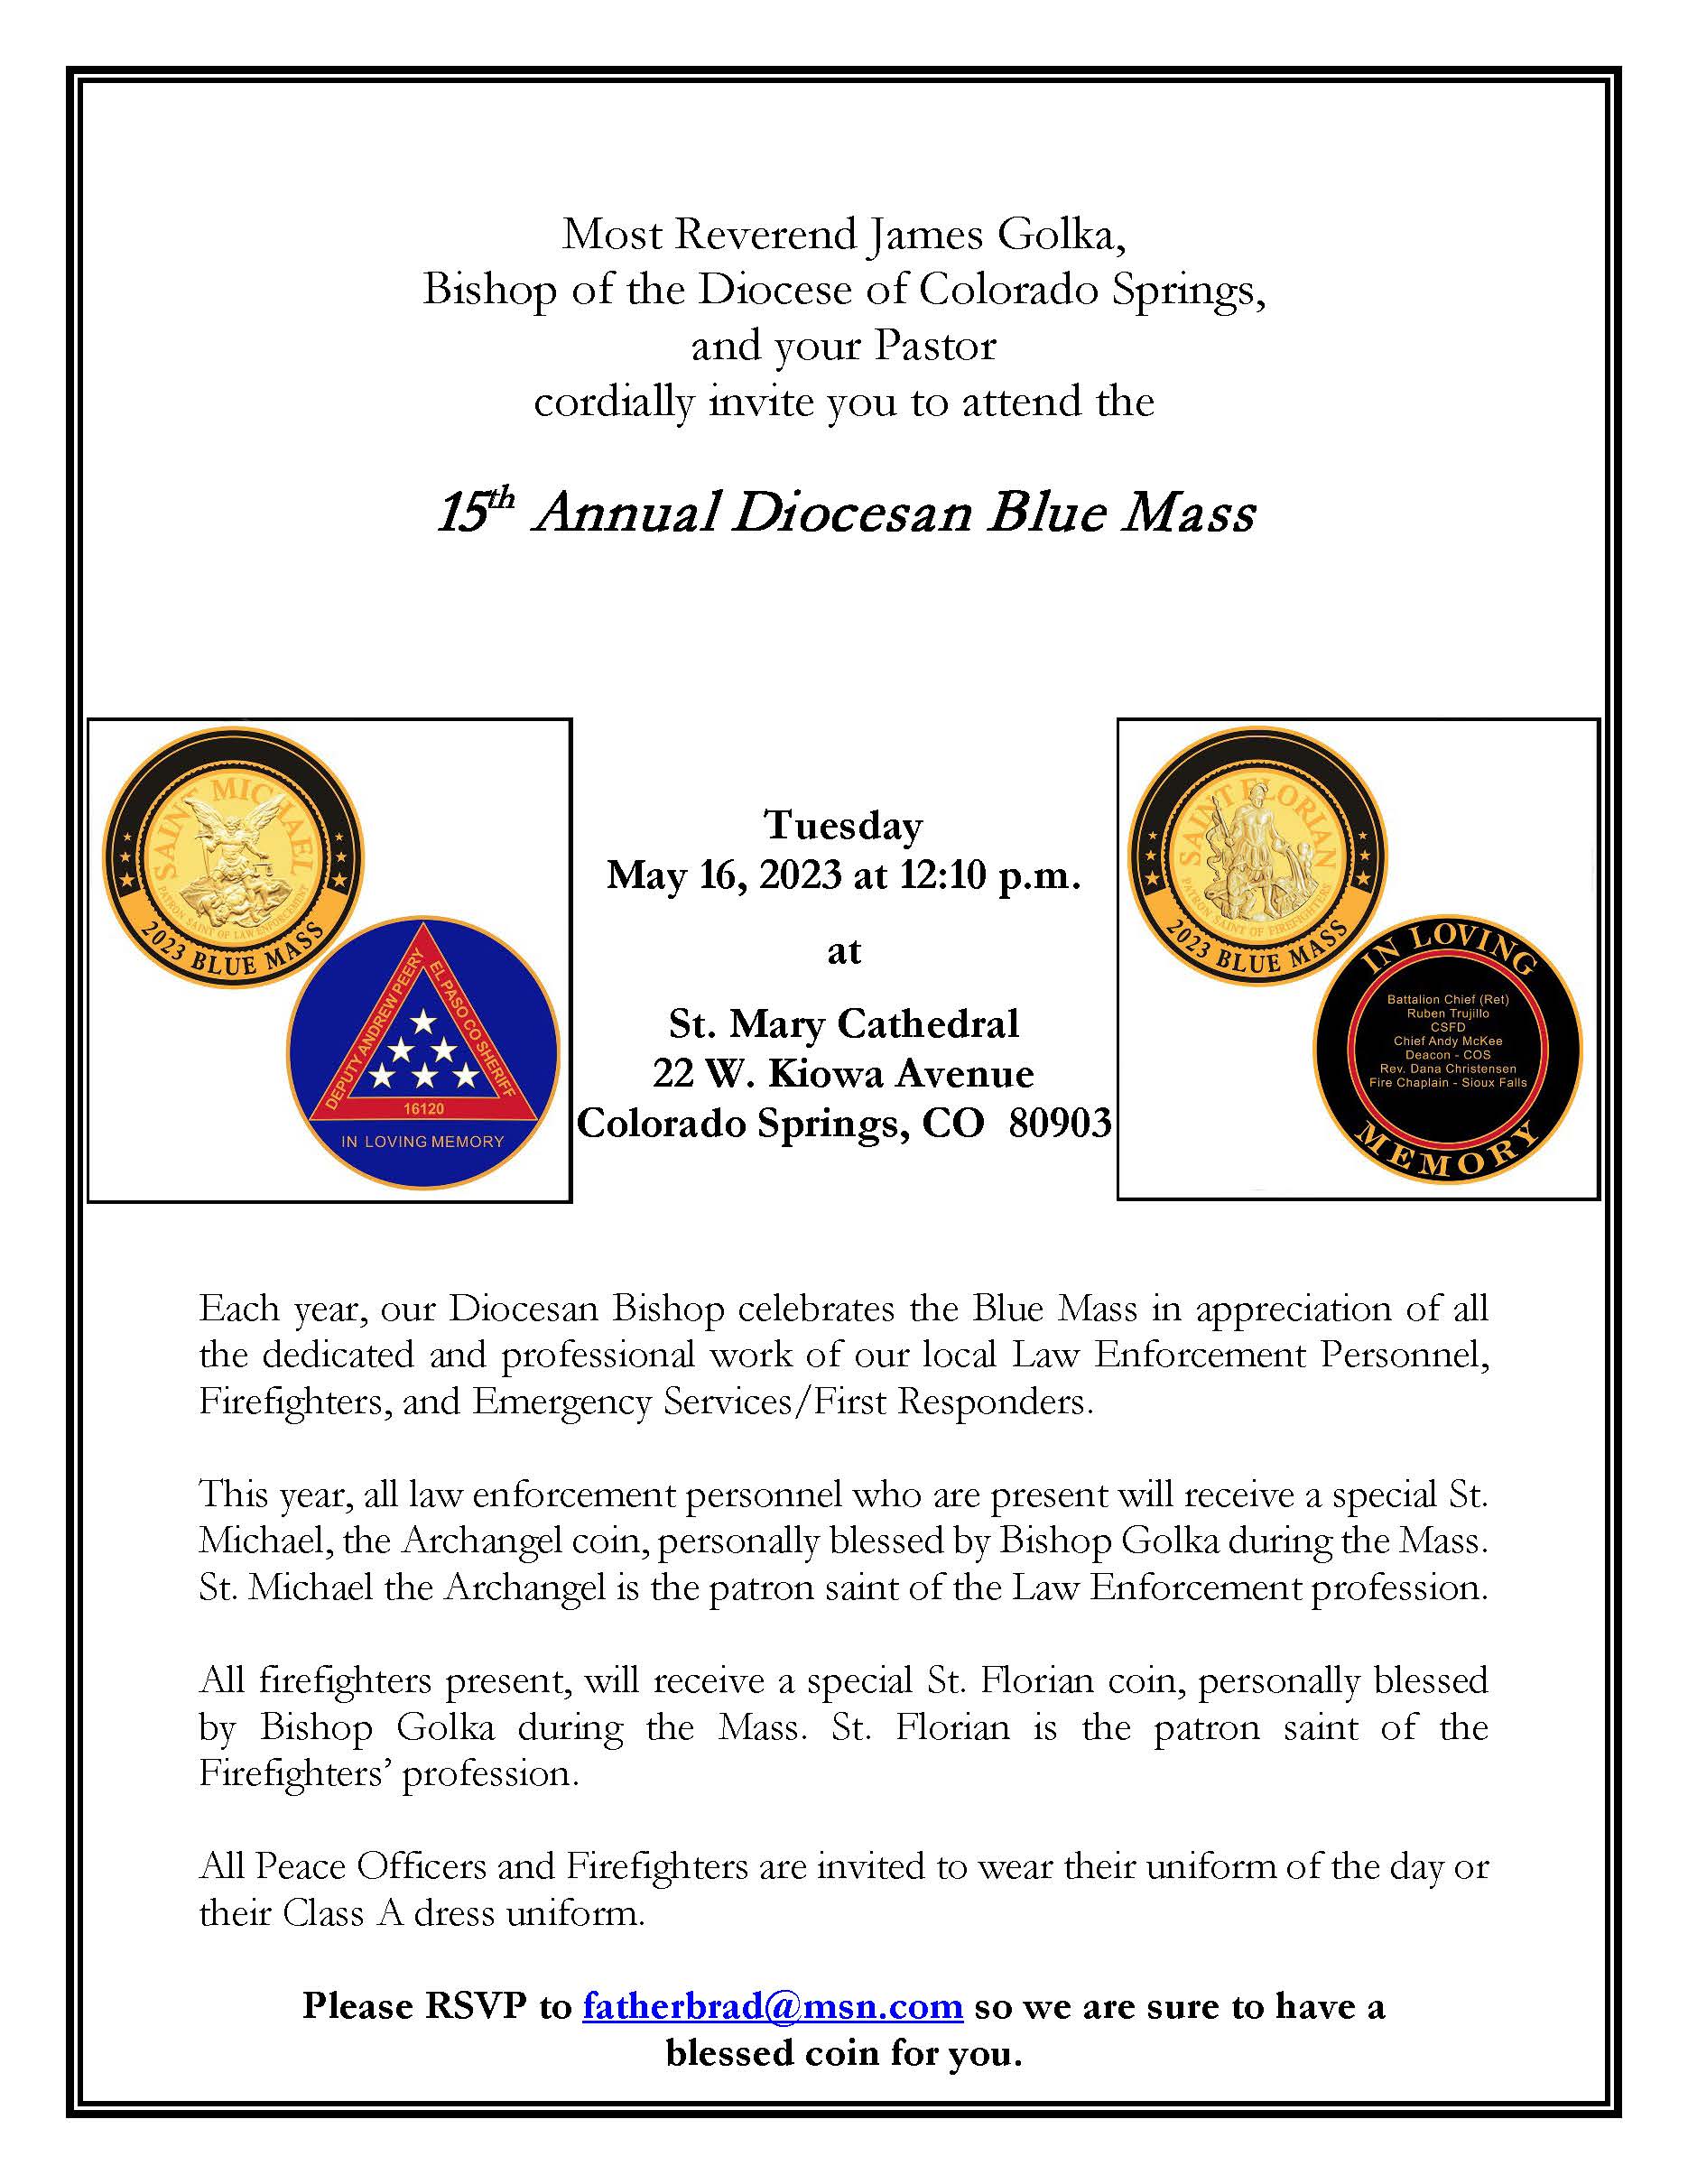 15th Annual Diocesan Blue Mass